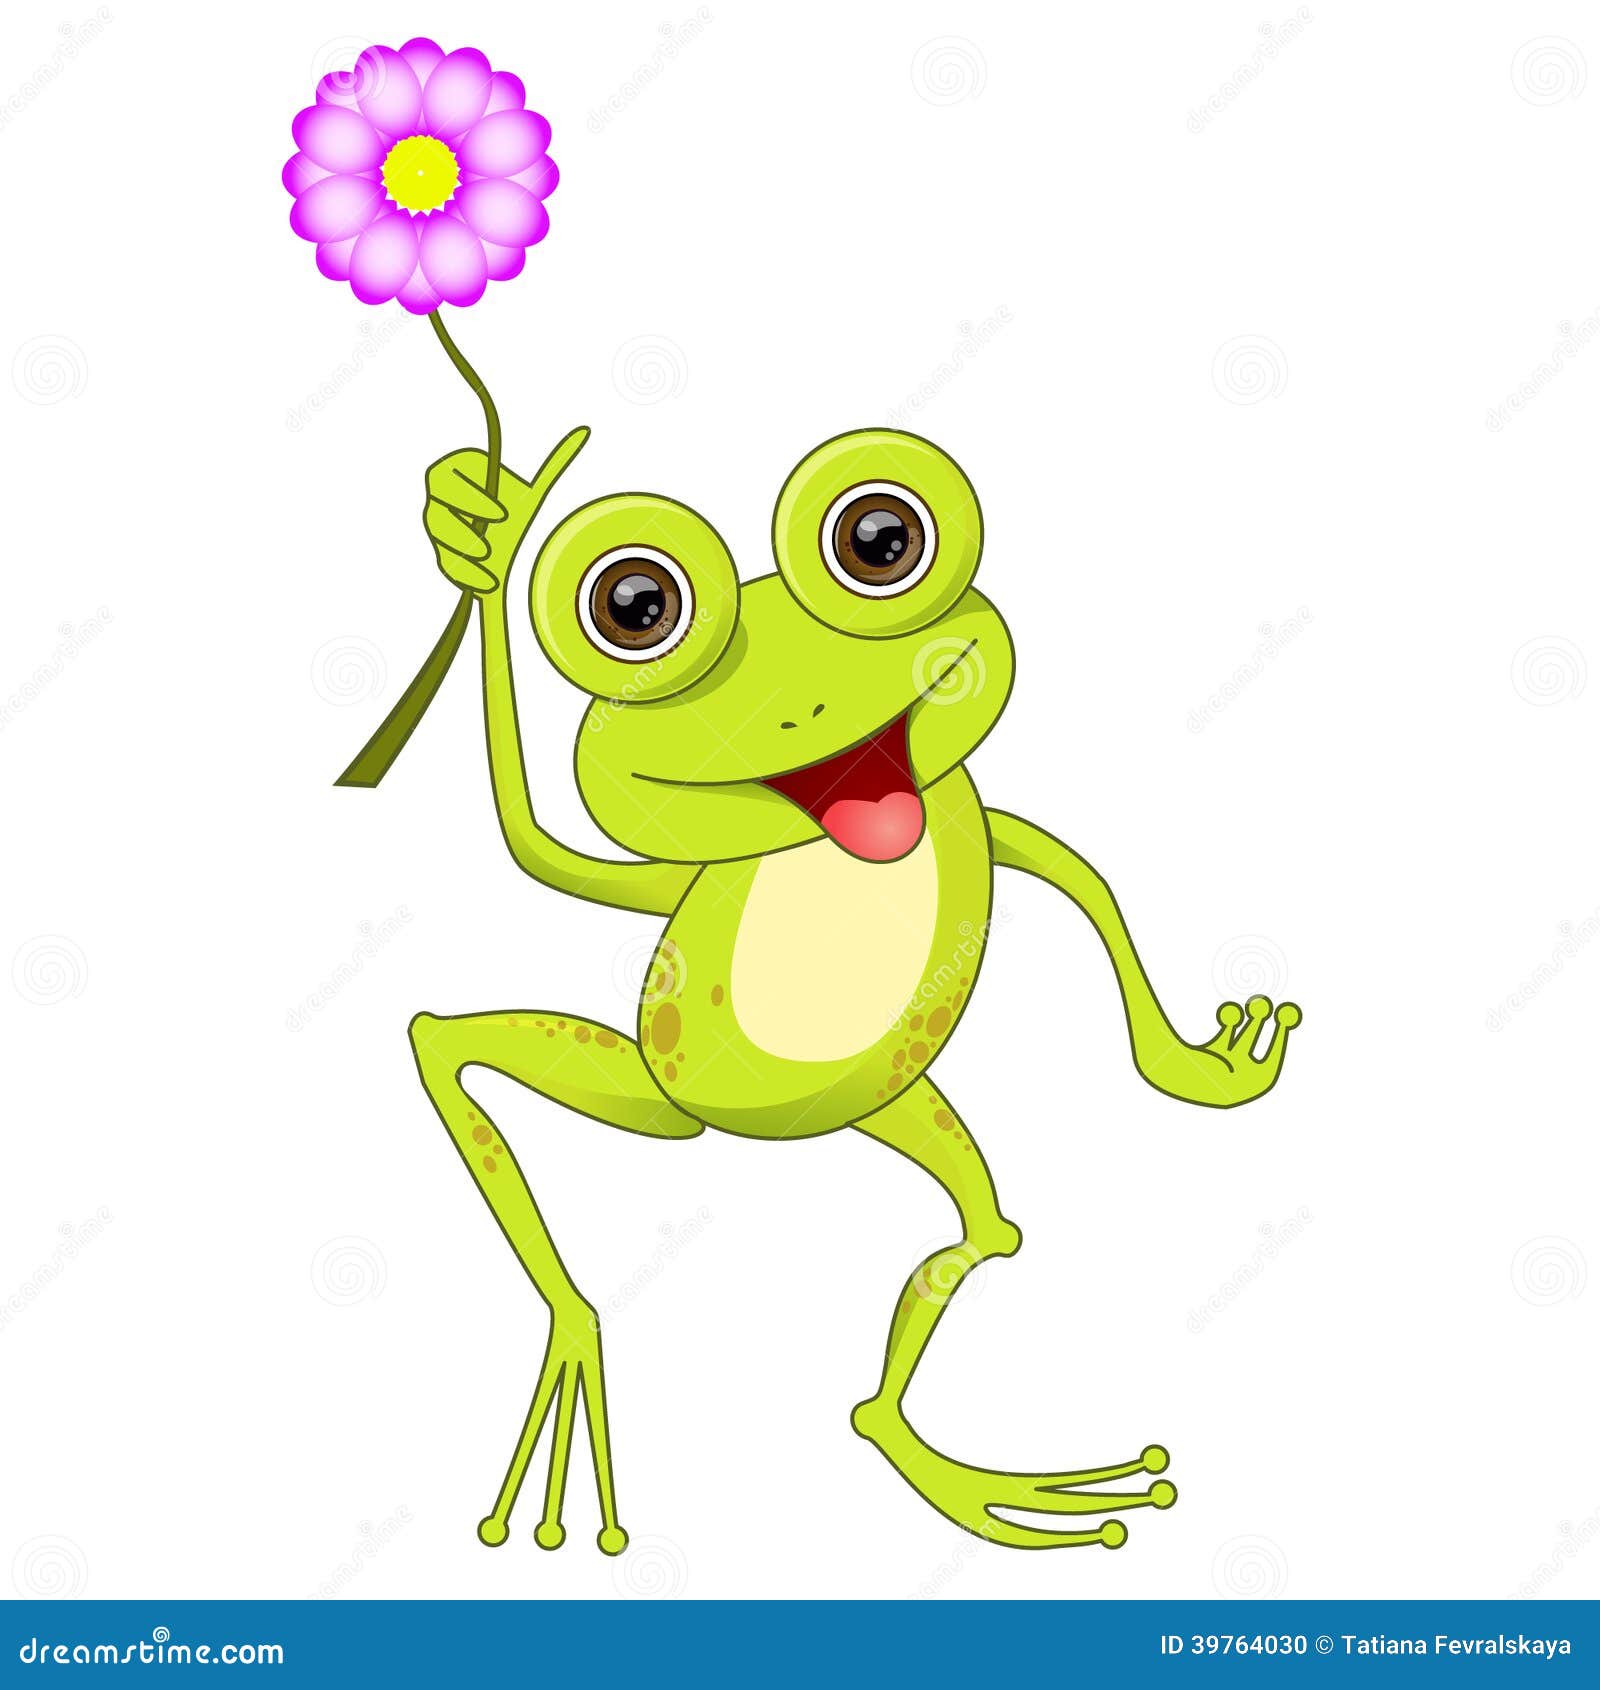 Cute Cartoon Frog Stock Vector - Image: 39764030